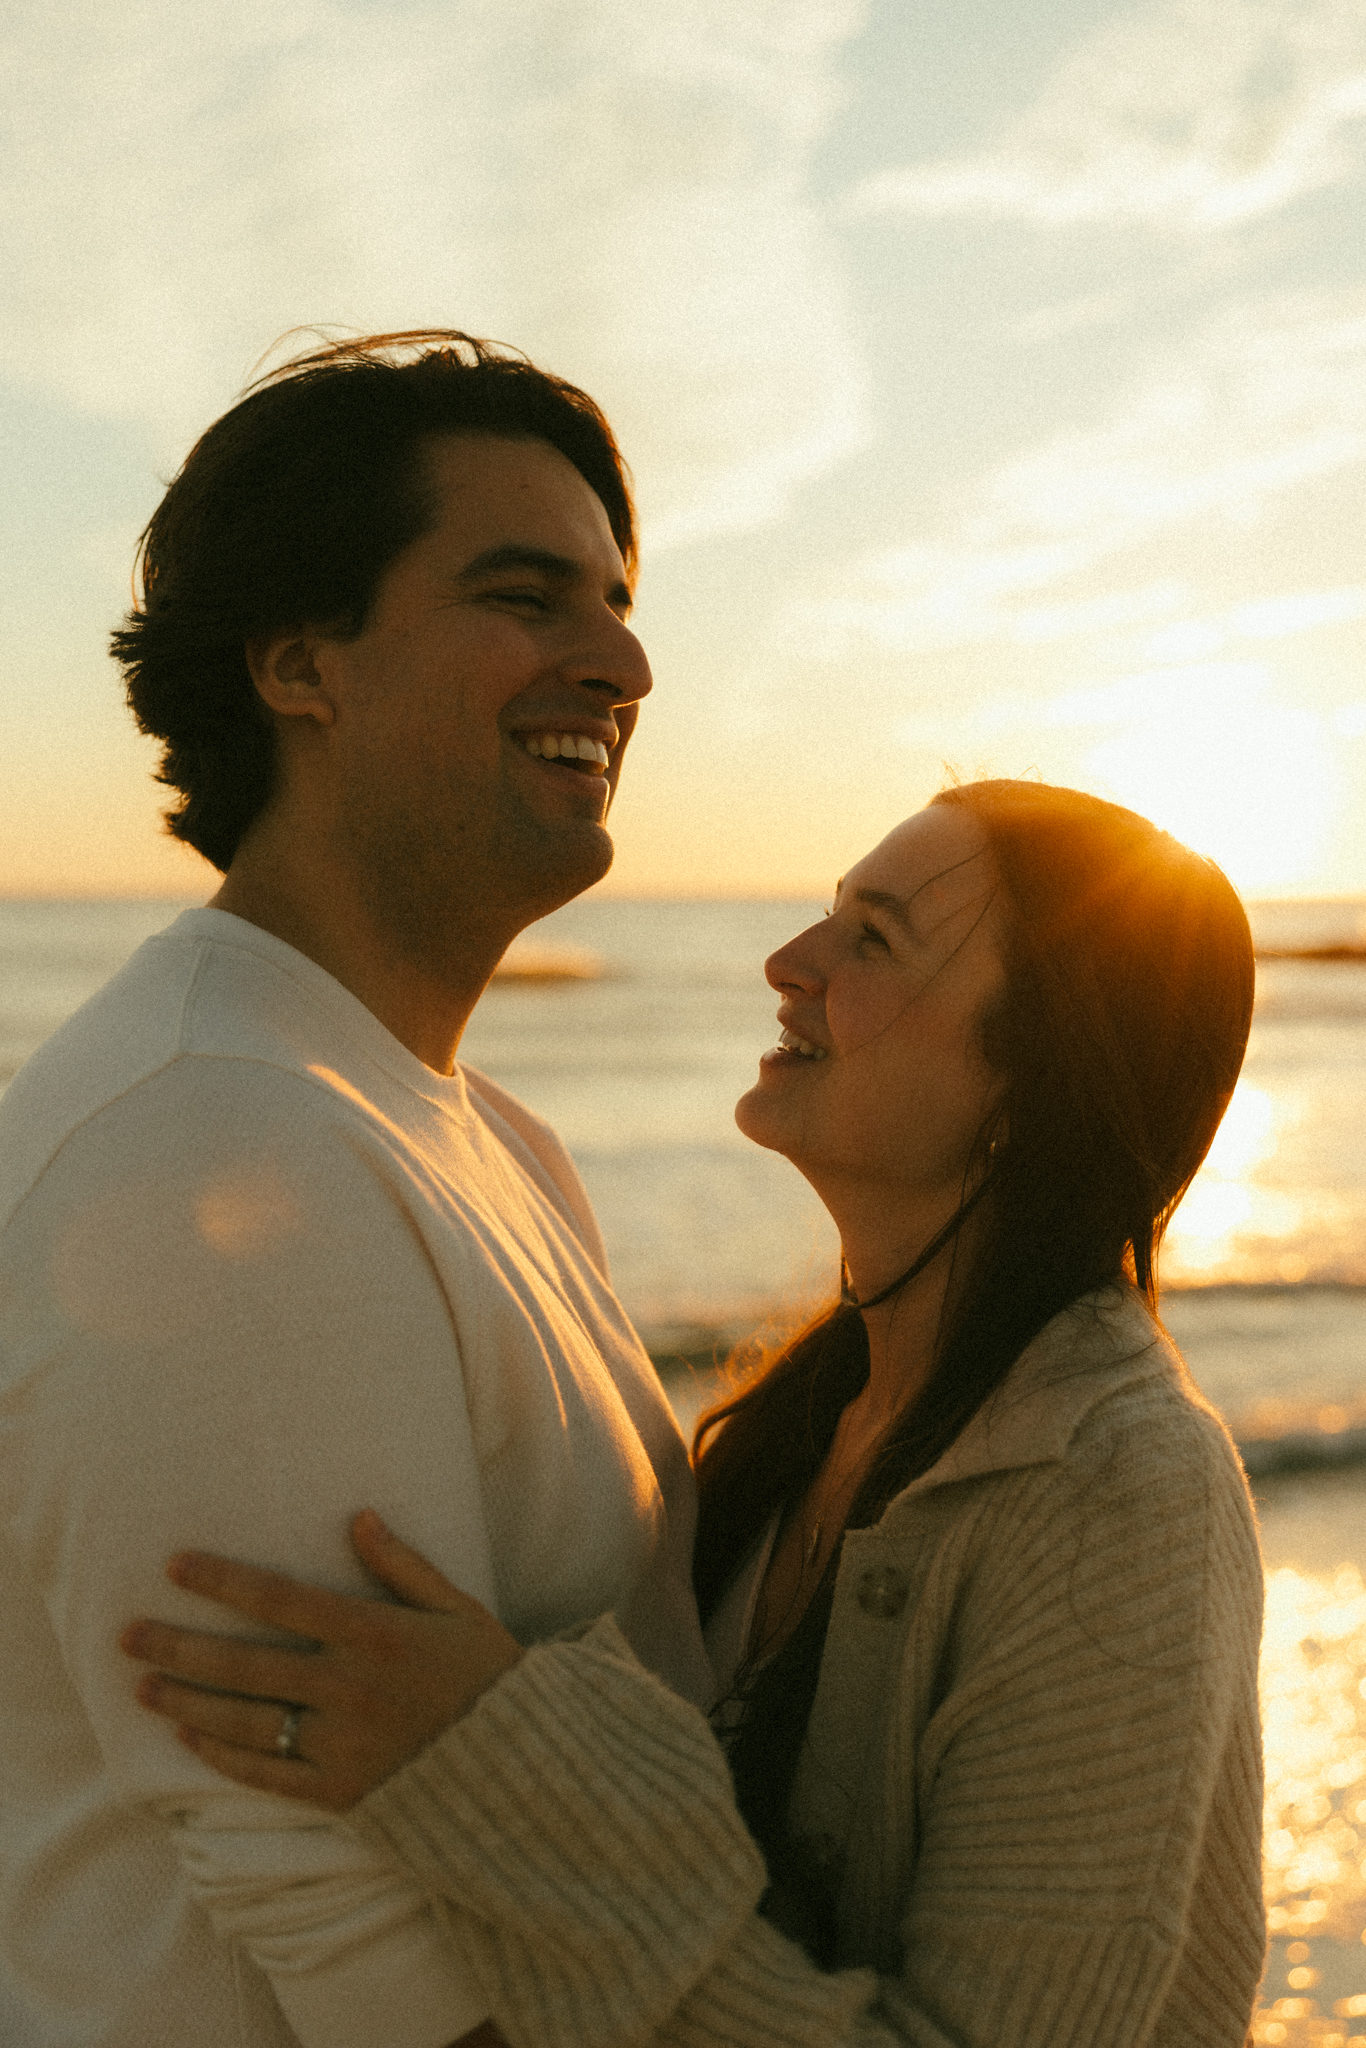 Golden sunset couples portrait on Florida beach